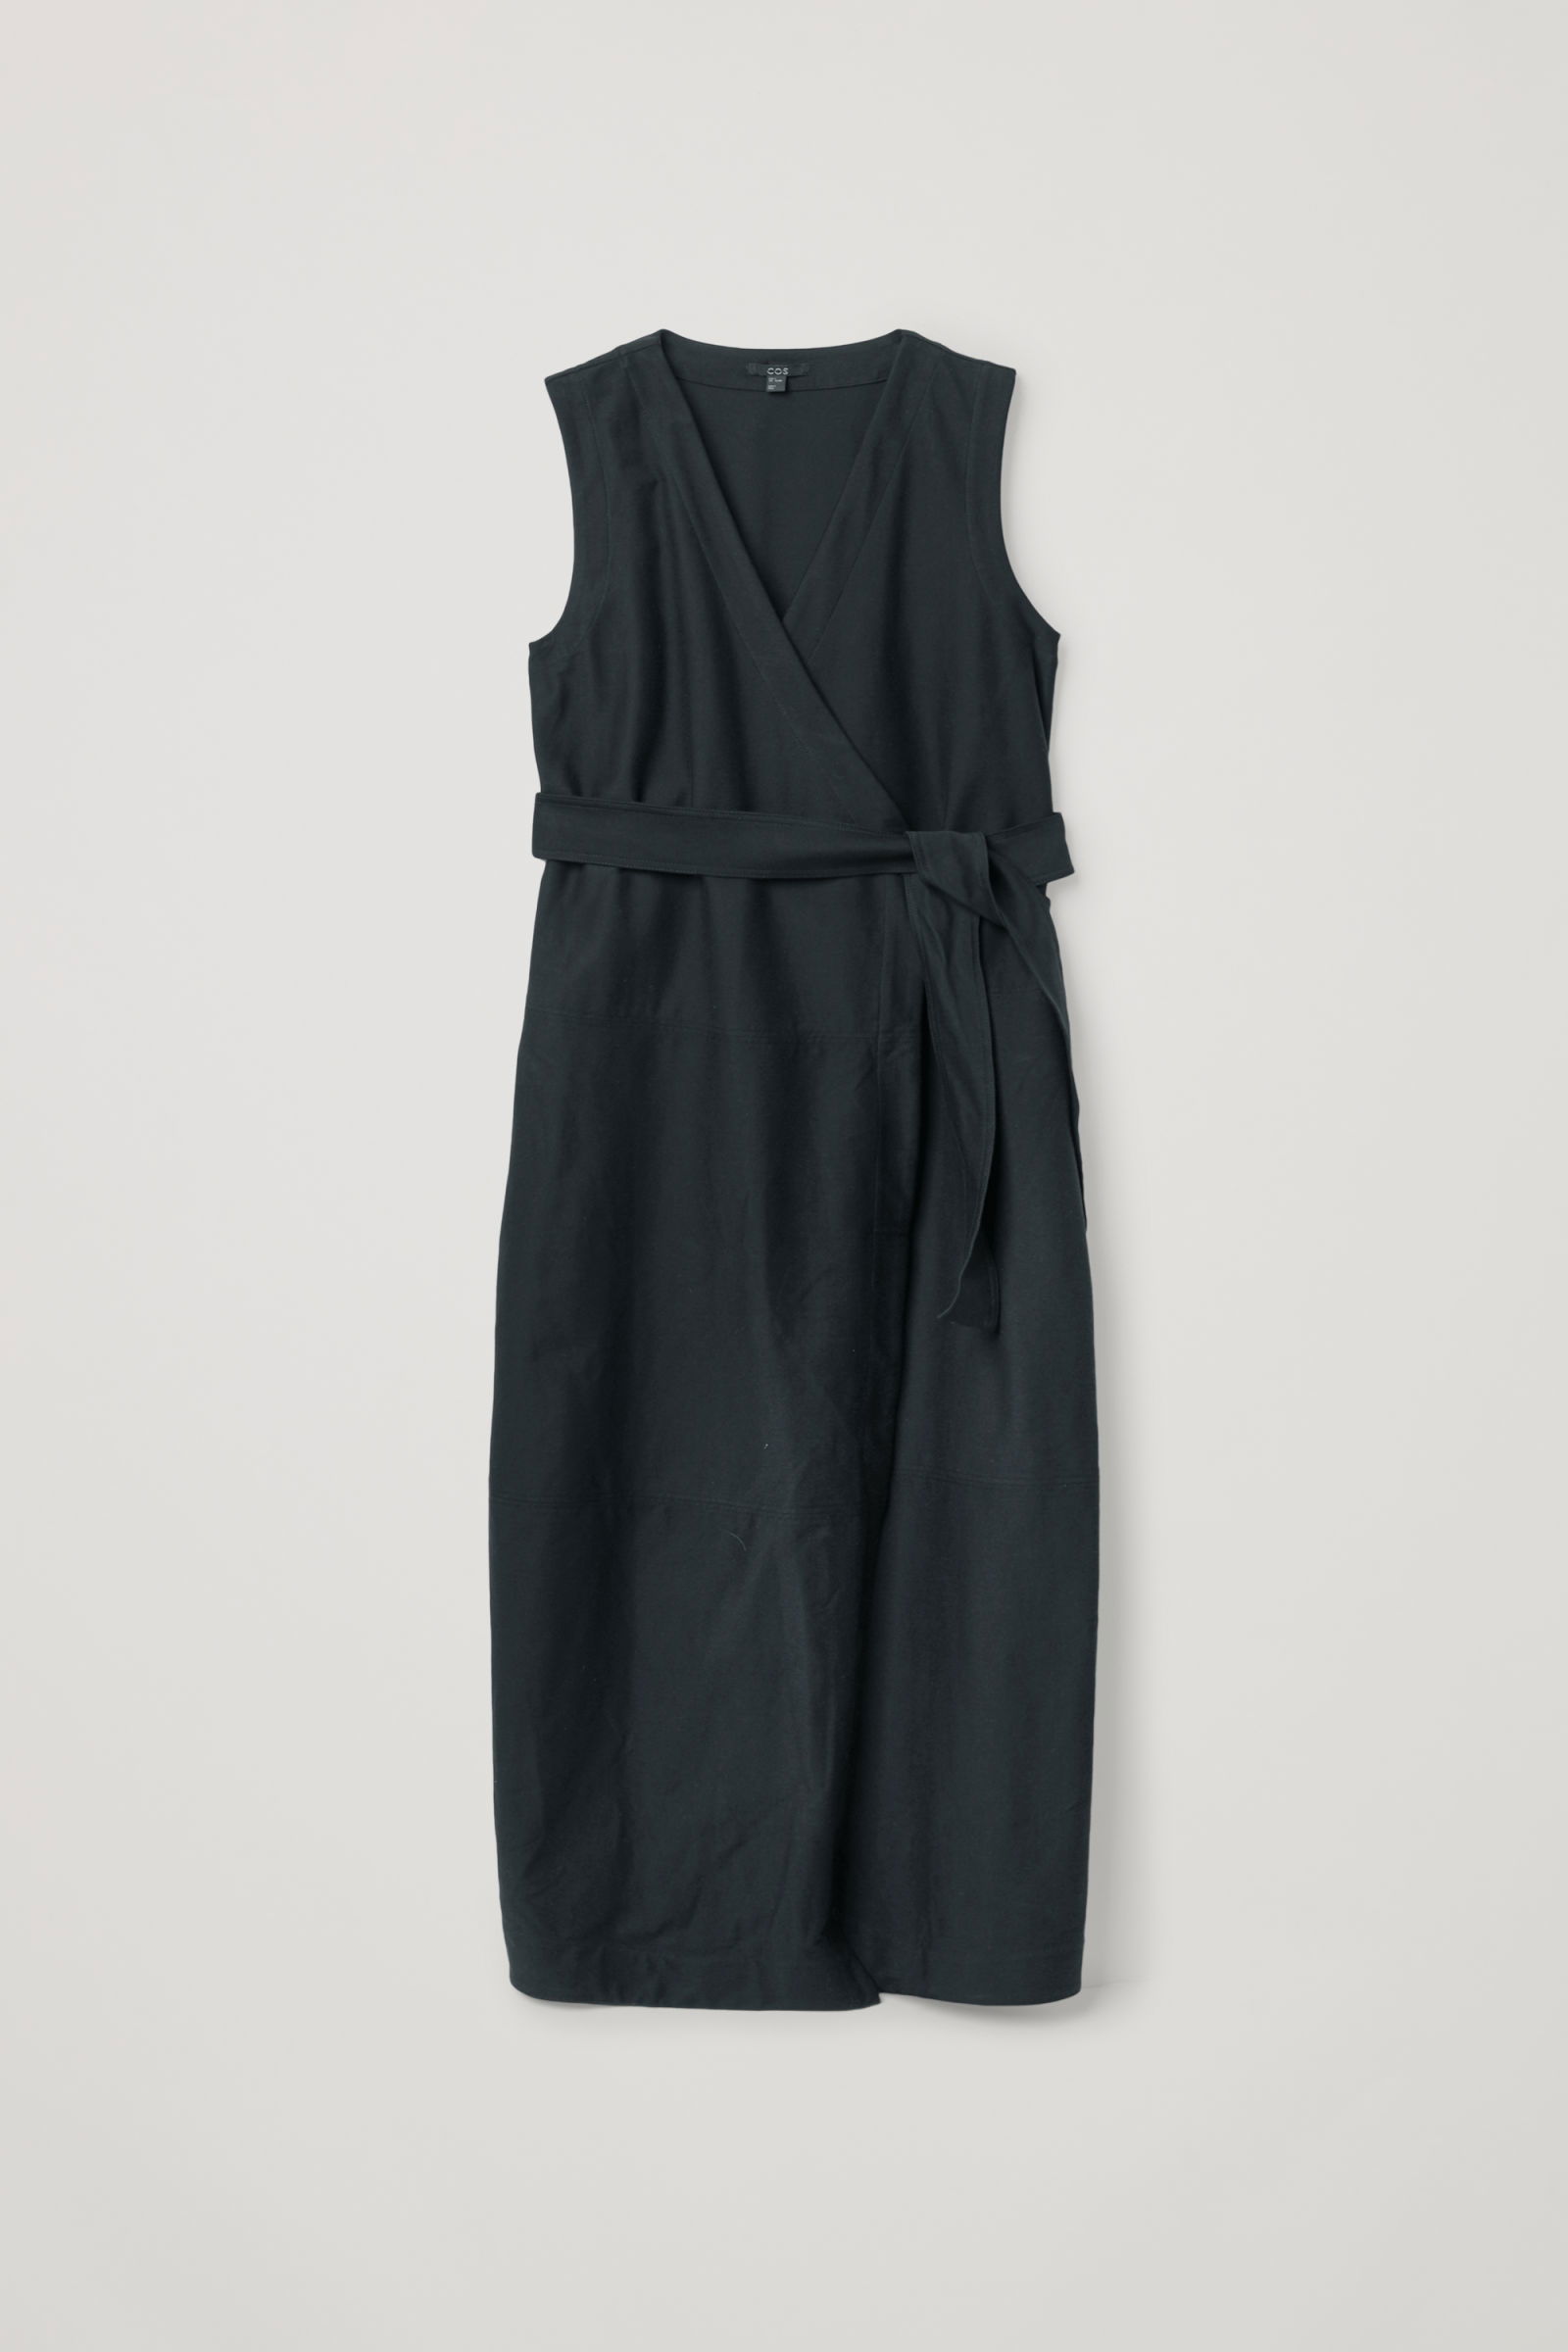 Exofficio M Black Sheath Dress Sleeveless Organic Cotton Blend Stretch